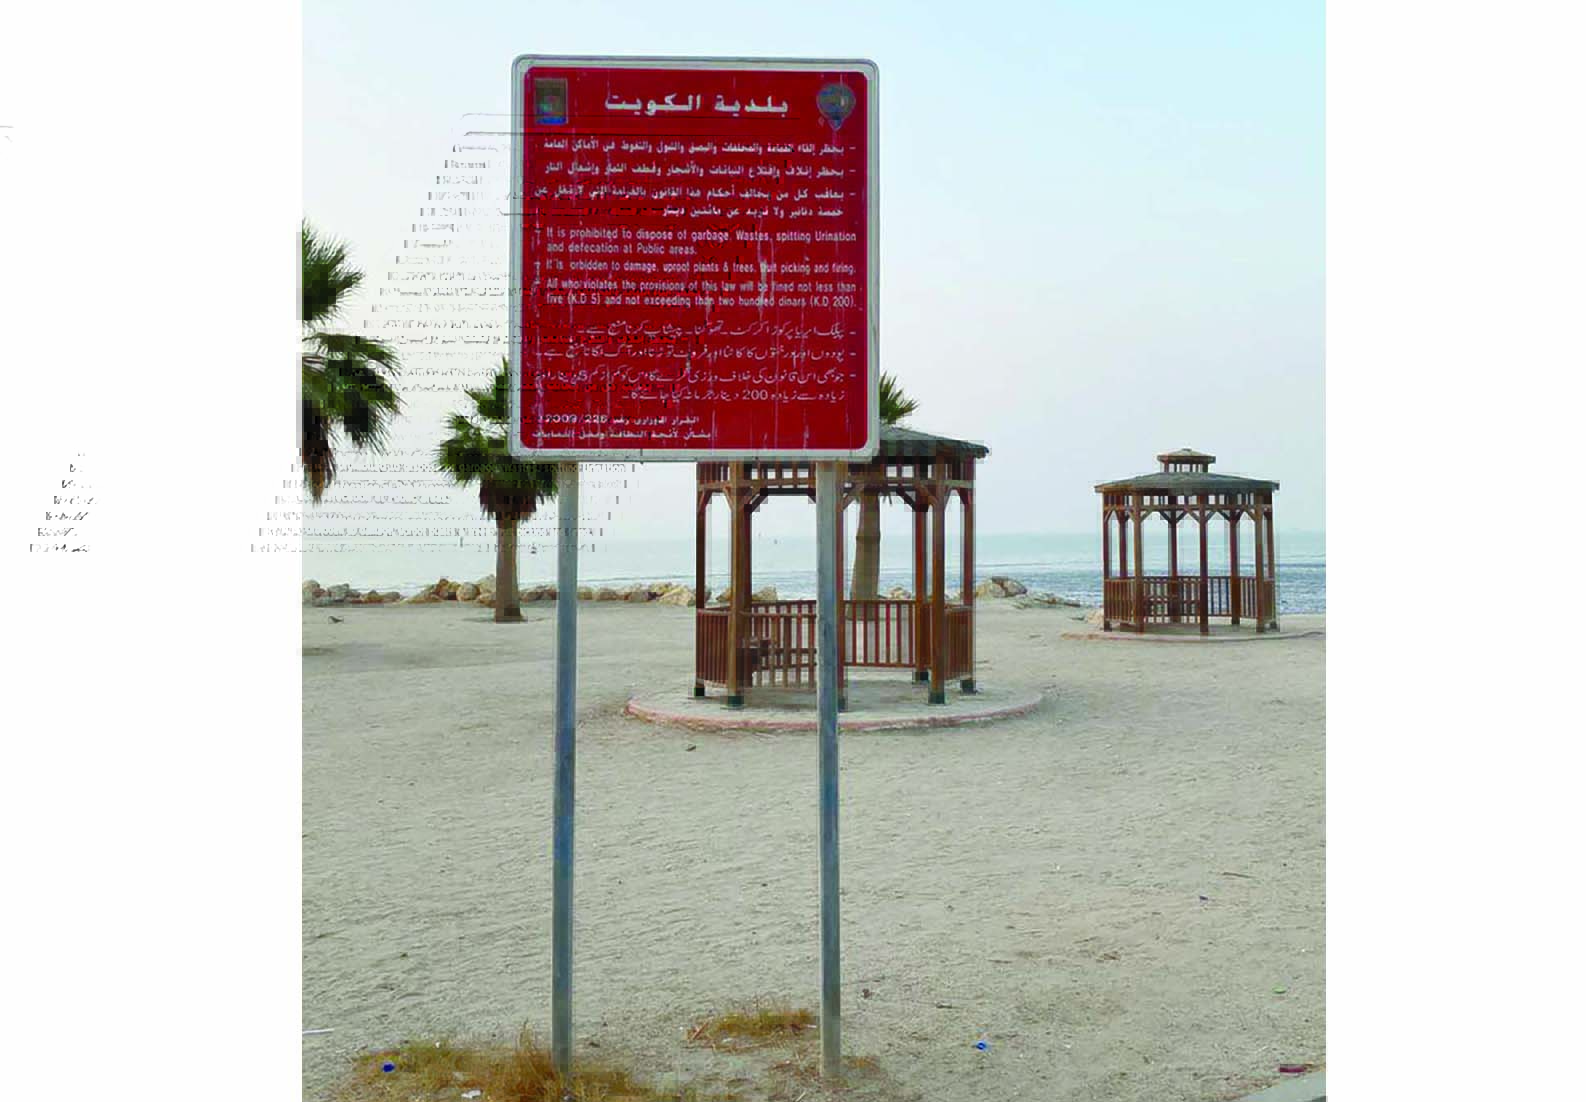 KUWAIT: Signboards seen at various beaches around Kuwait.